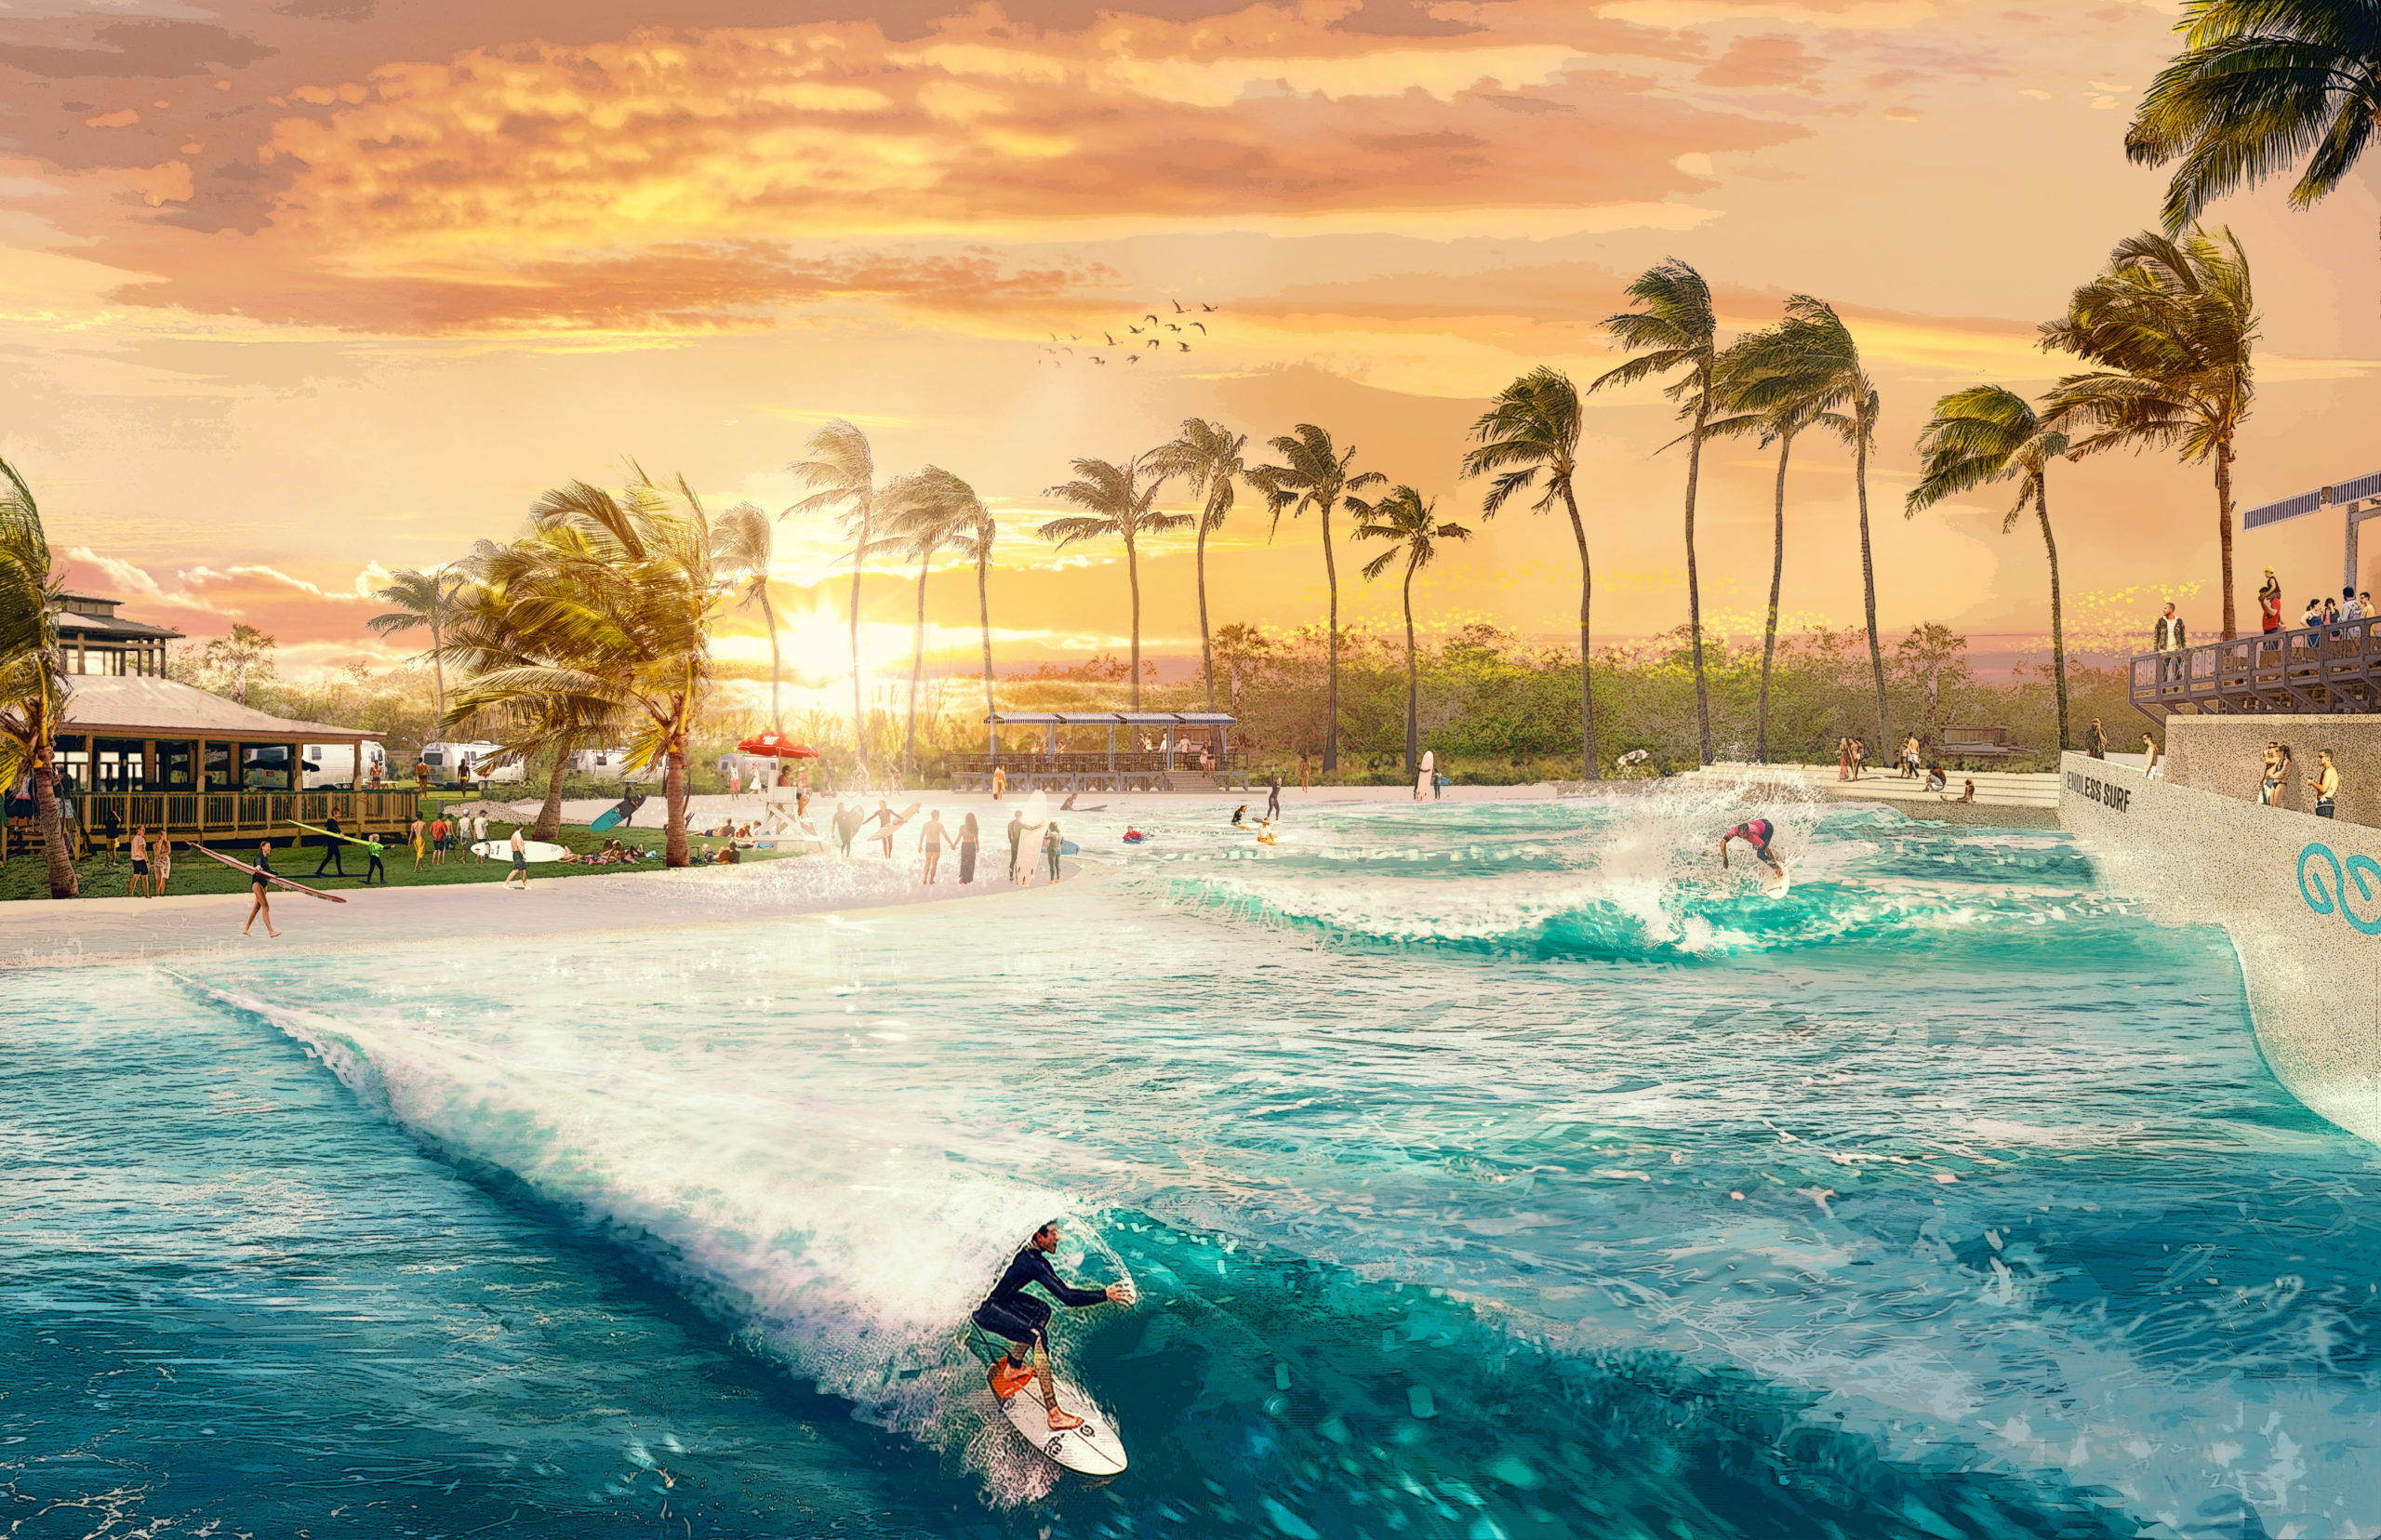 rendering of brazil surf park of Gabriel Medina, Kauai Ventures, and Endless Surf